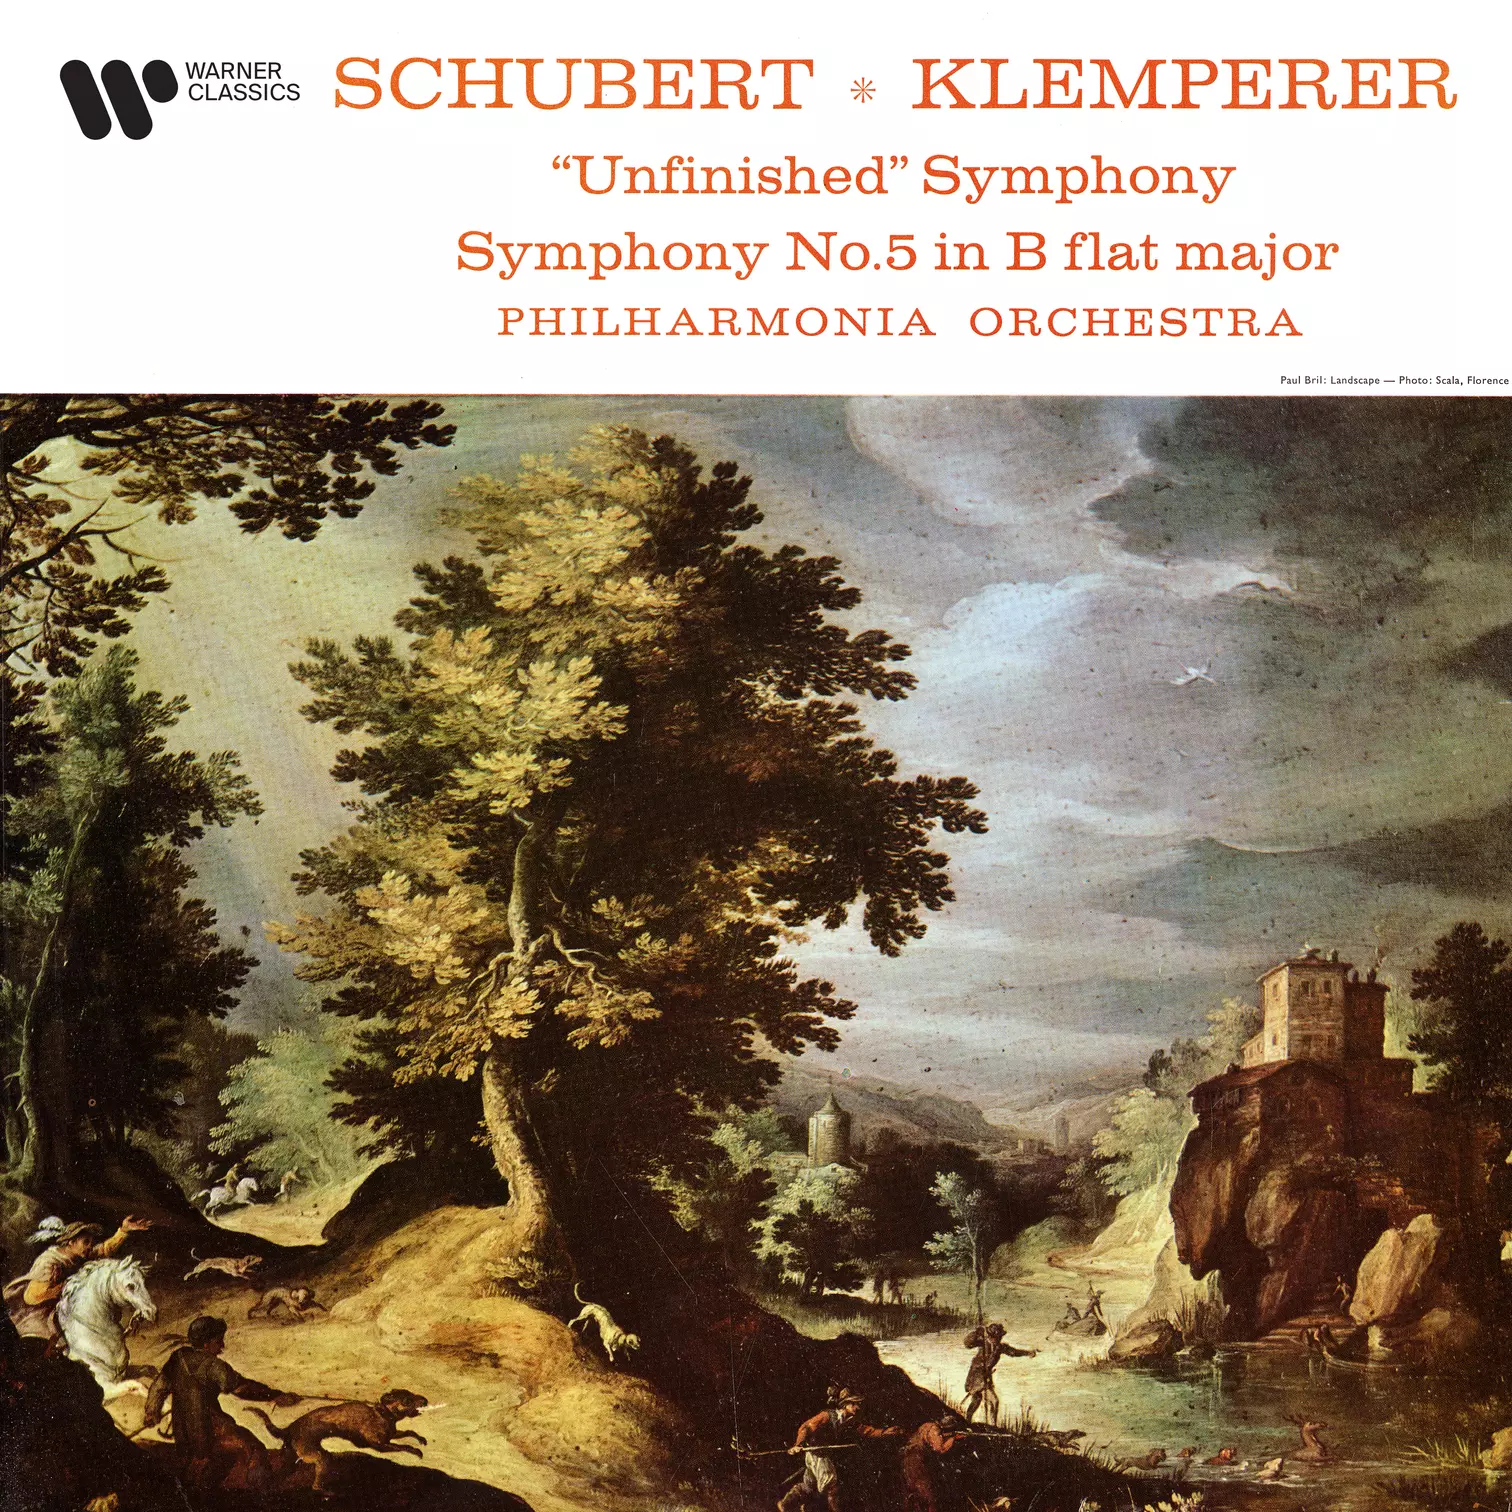 Schubert: Symphonies Nos. 5 & 8 “Unfinished”